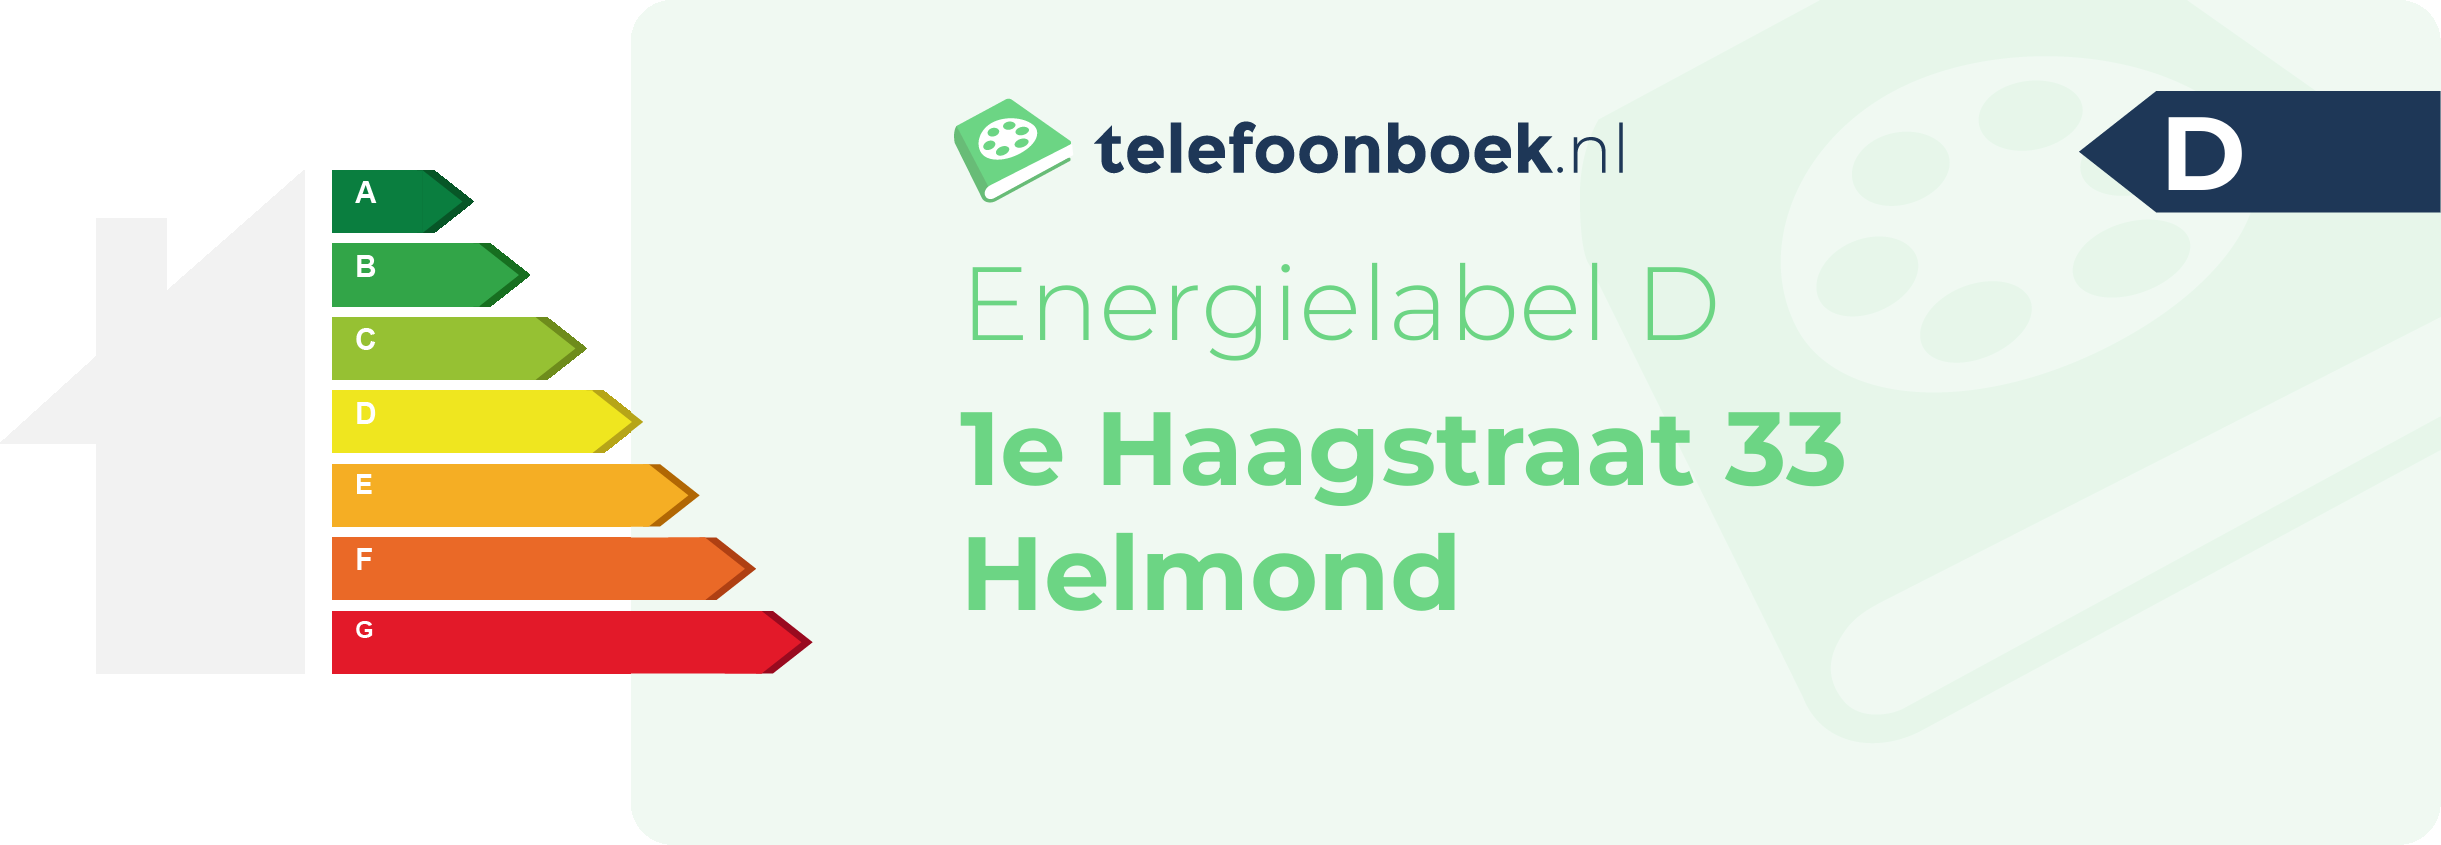 Energielabel 1e Haagstraat 33 Helmond